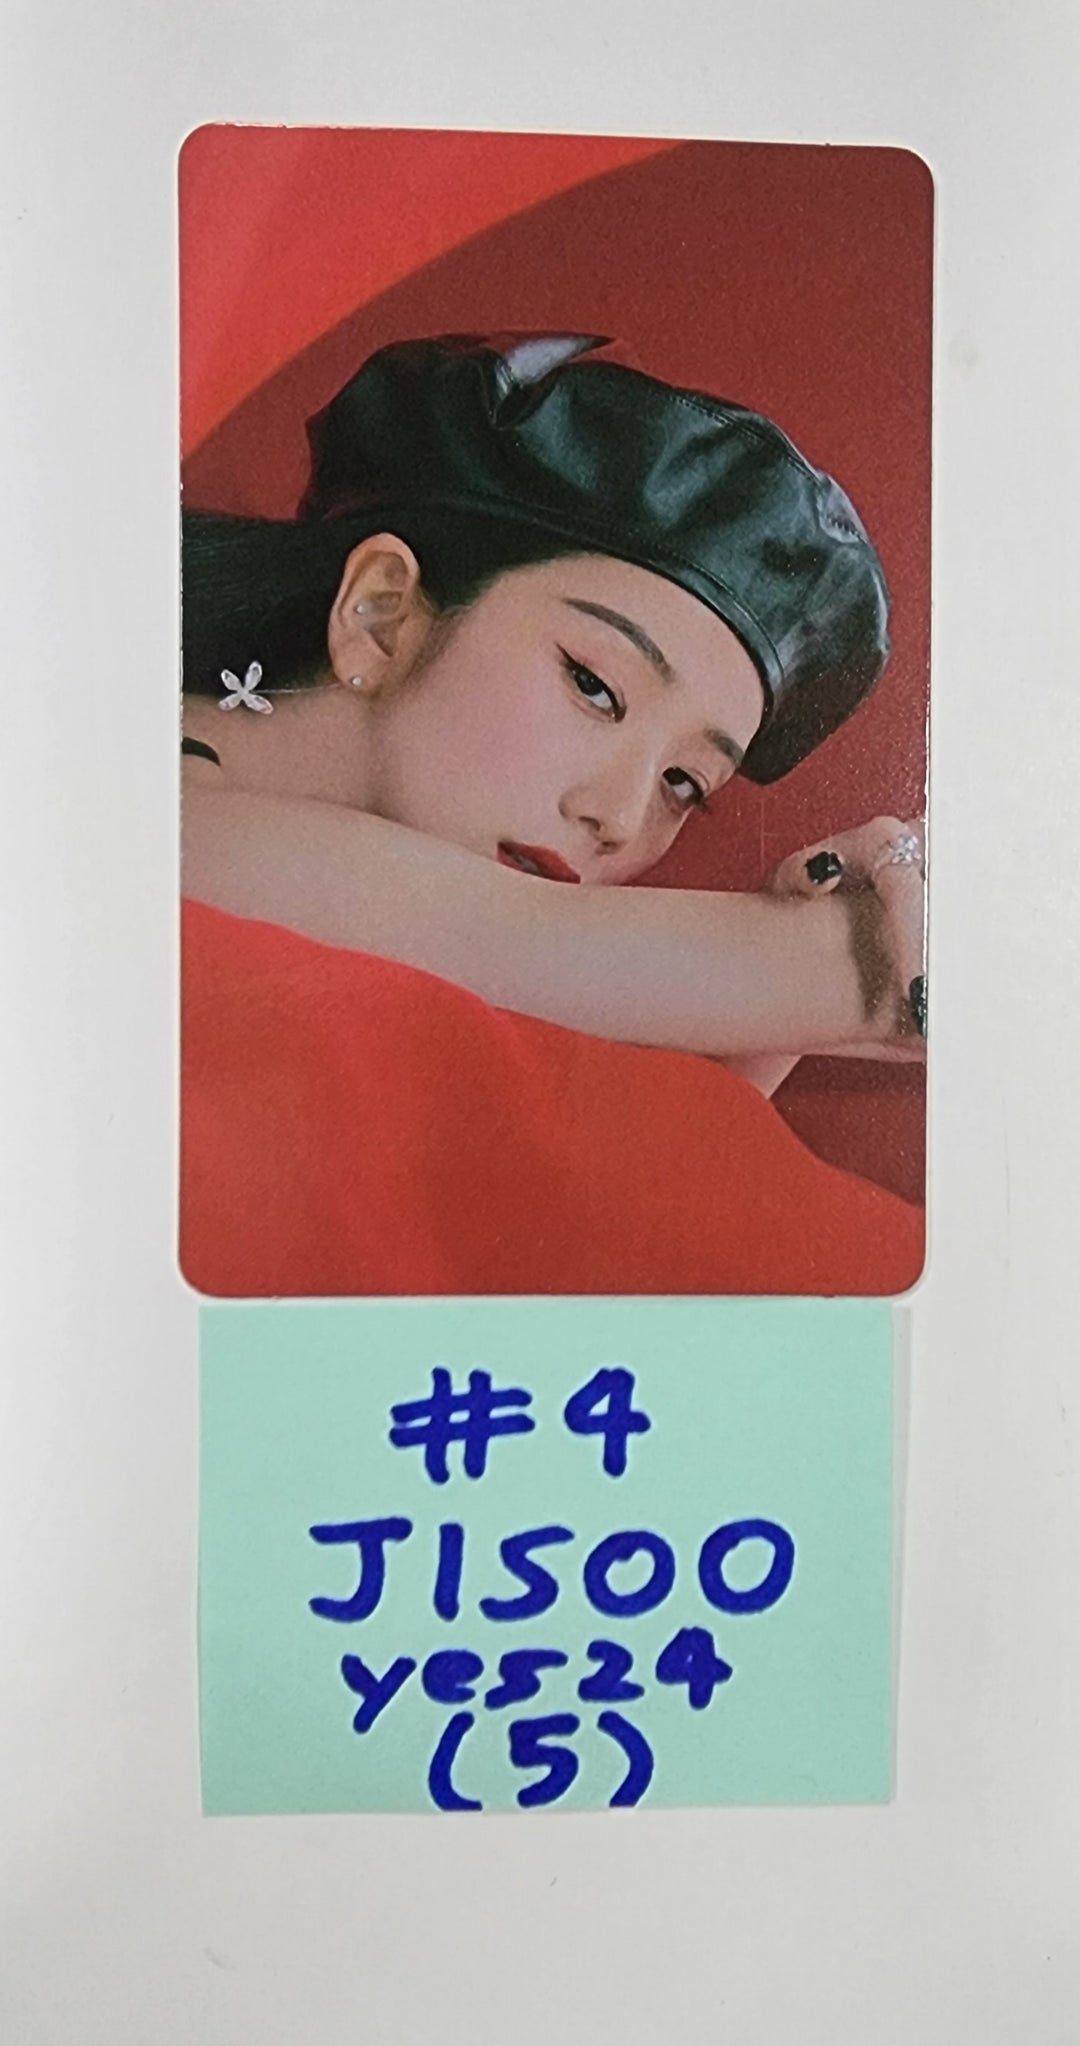 JISOO (Of Black Pink) "ME" 1st Single Album - Yes24 Pre-Order Benefit Photocard